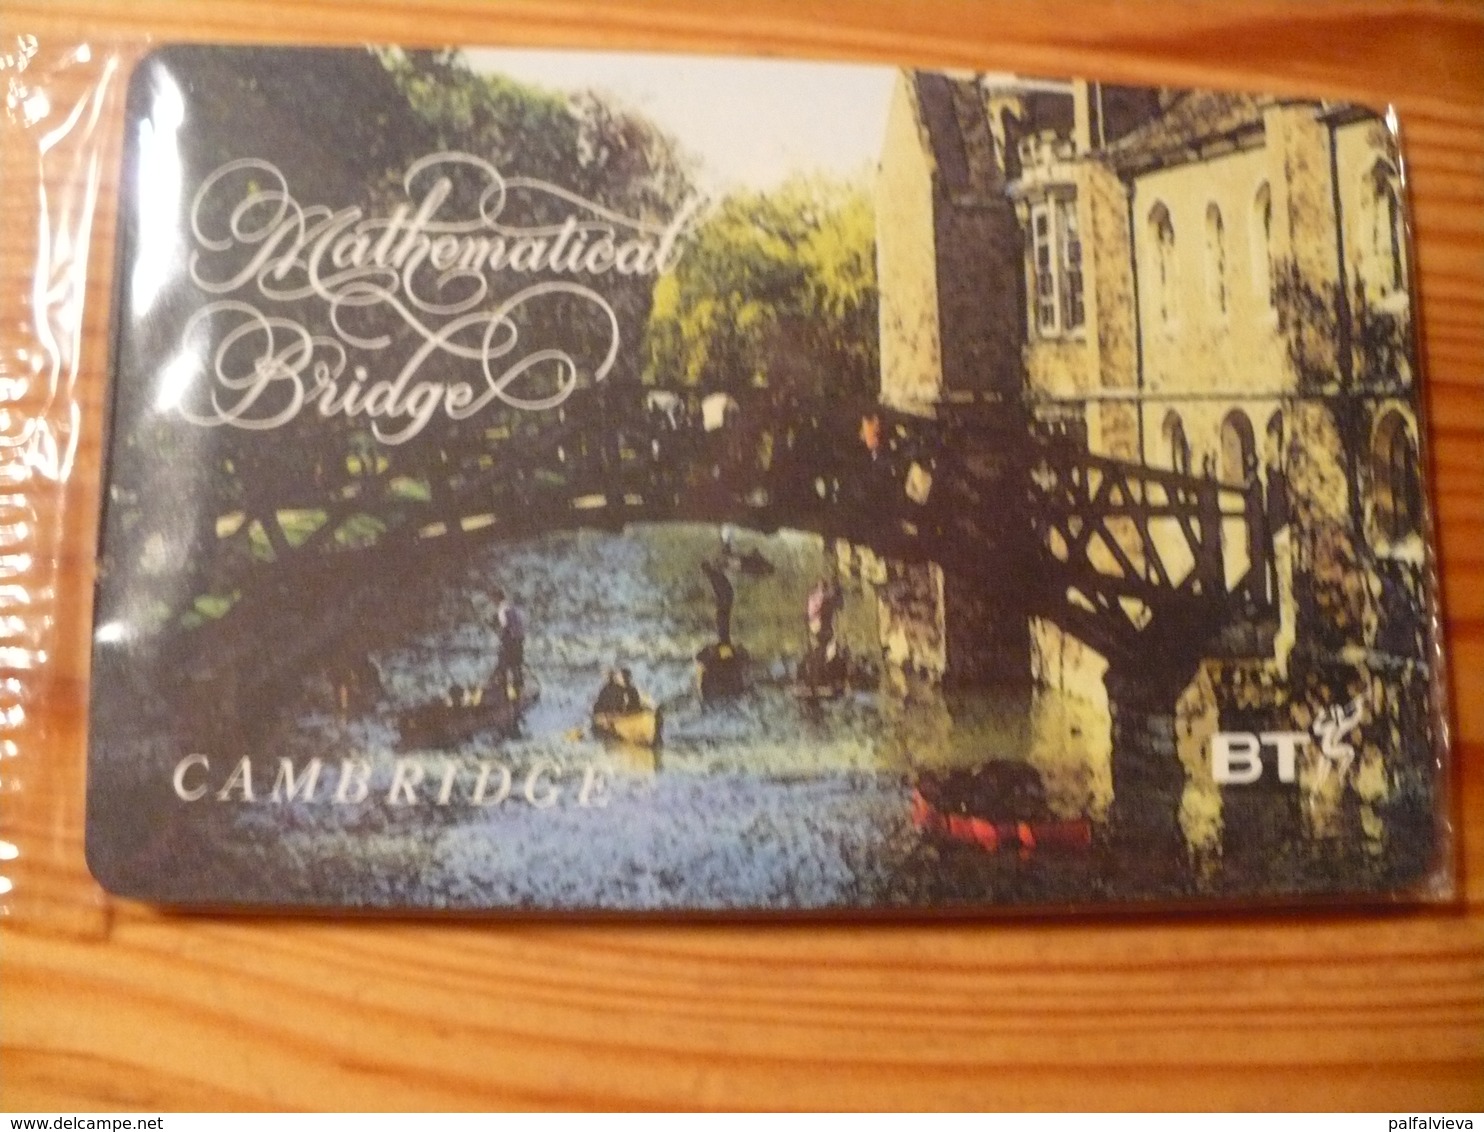 Phonecard United Kingdom, BT - Cambridge, Matchematical Bridge - BT Général